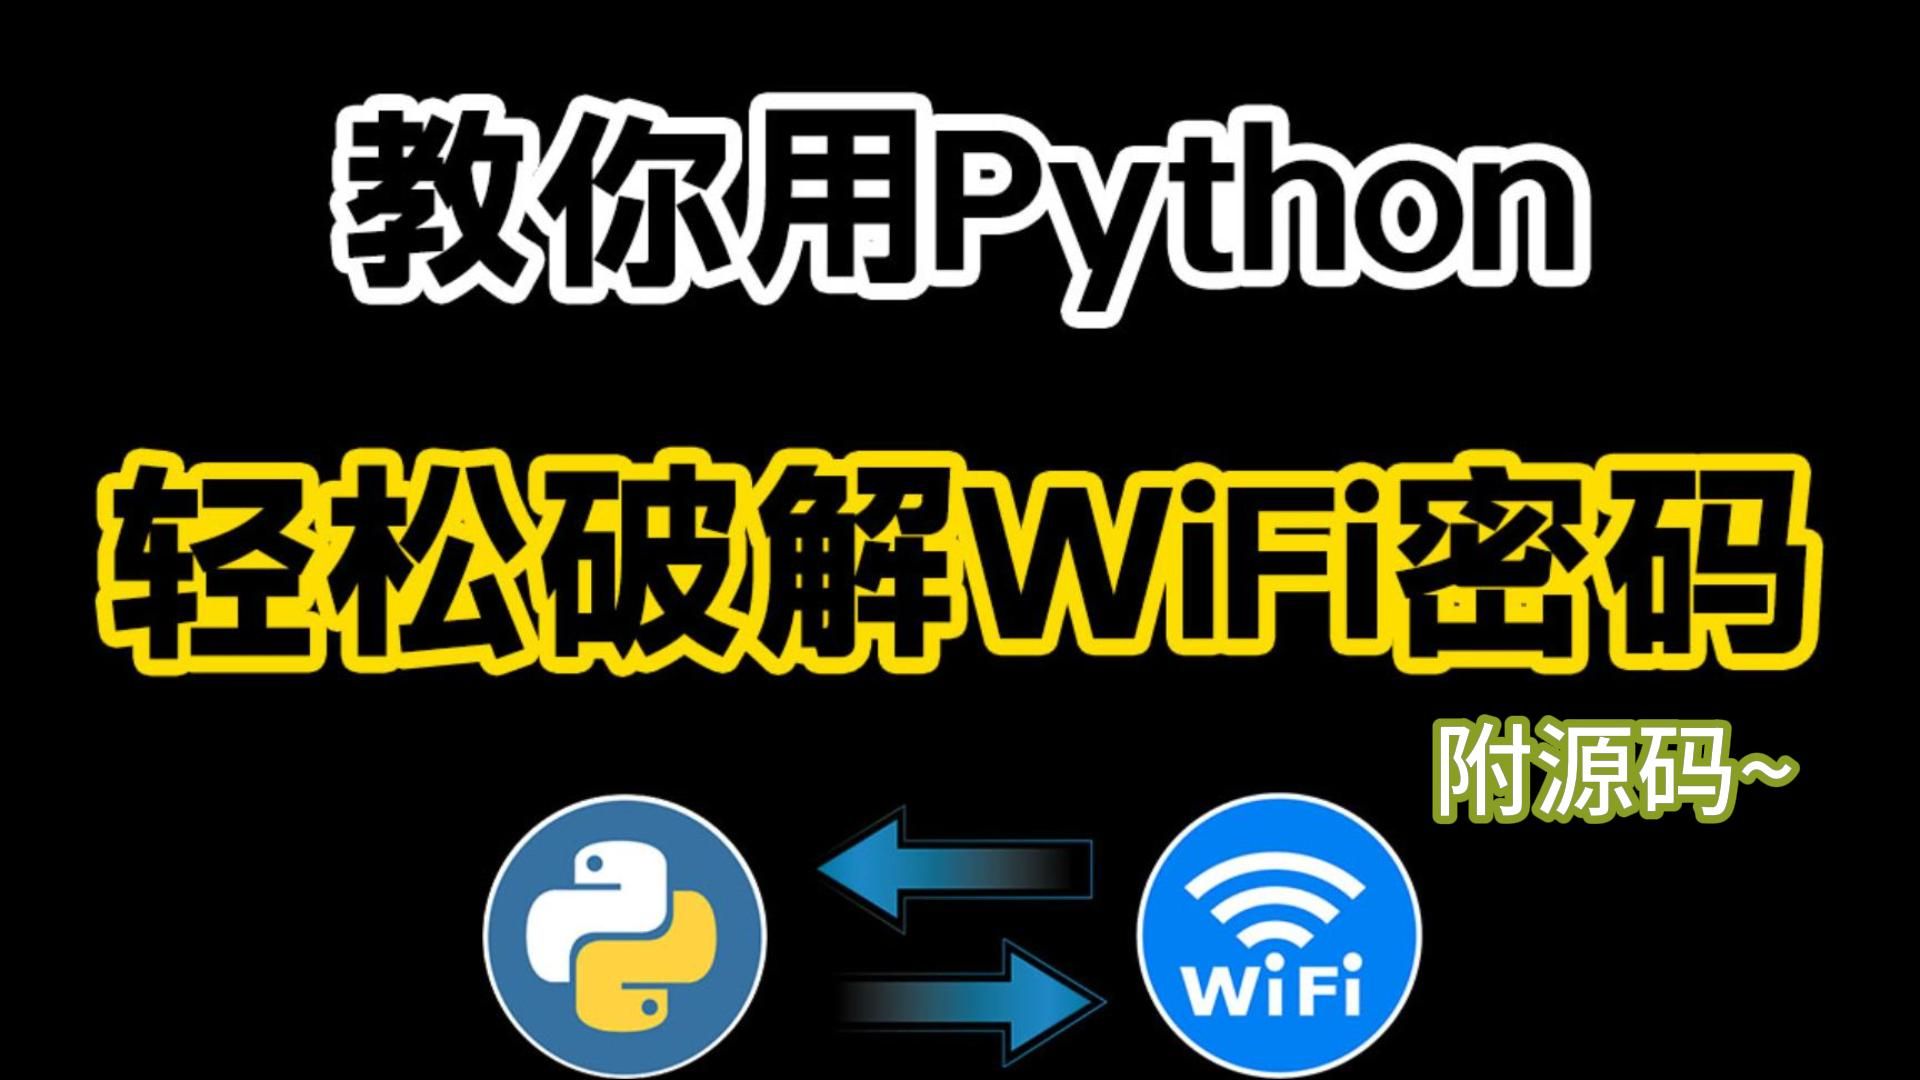 【Python爬虫】两分钟教你用Python轻松破解WiFi密码~